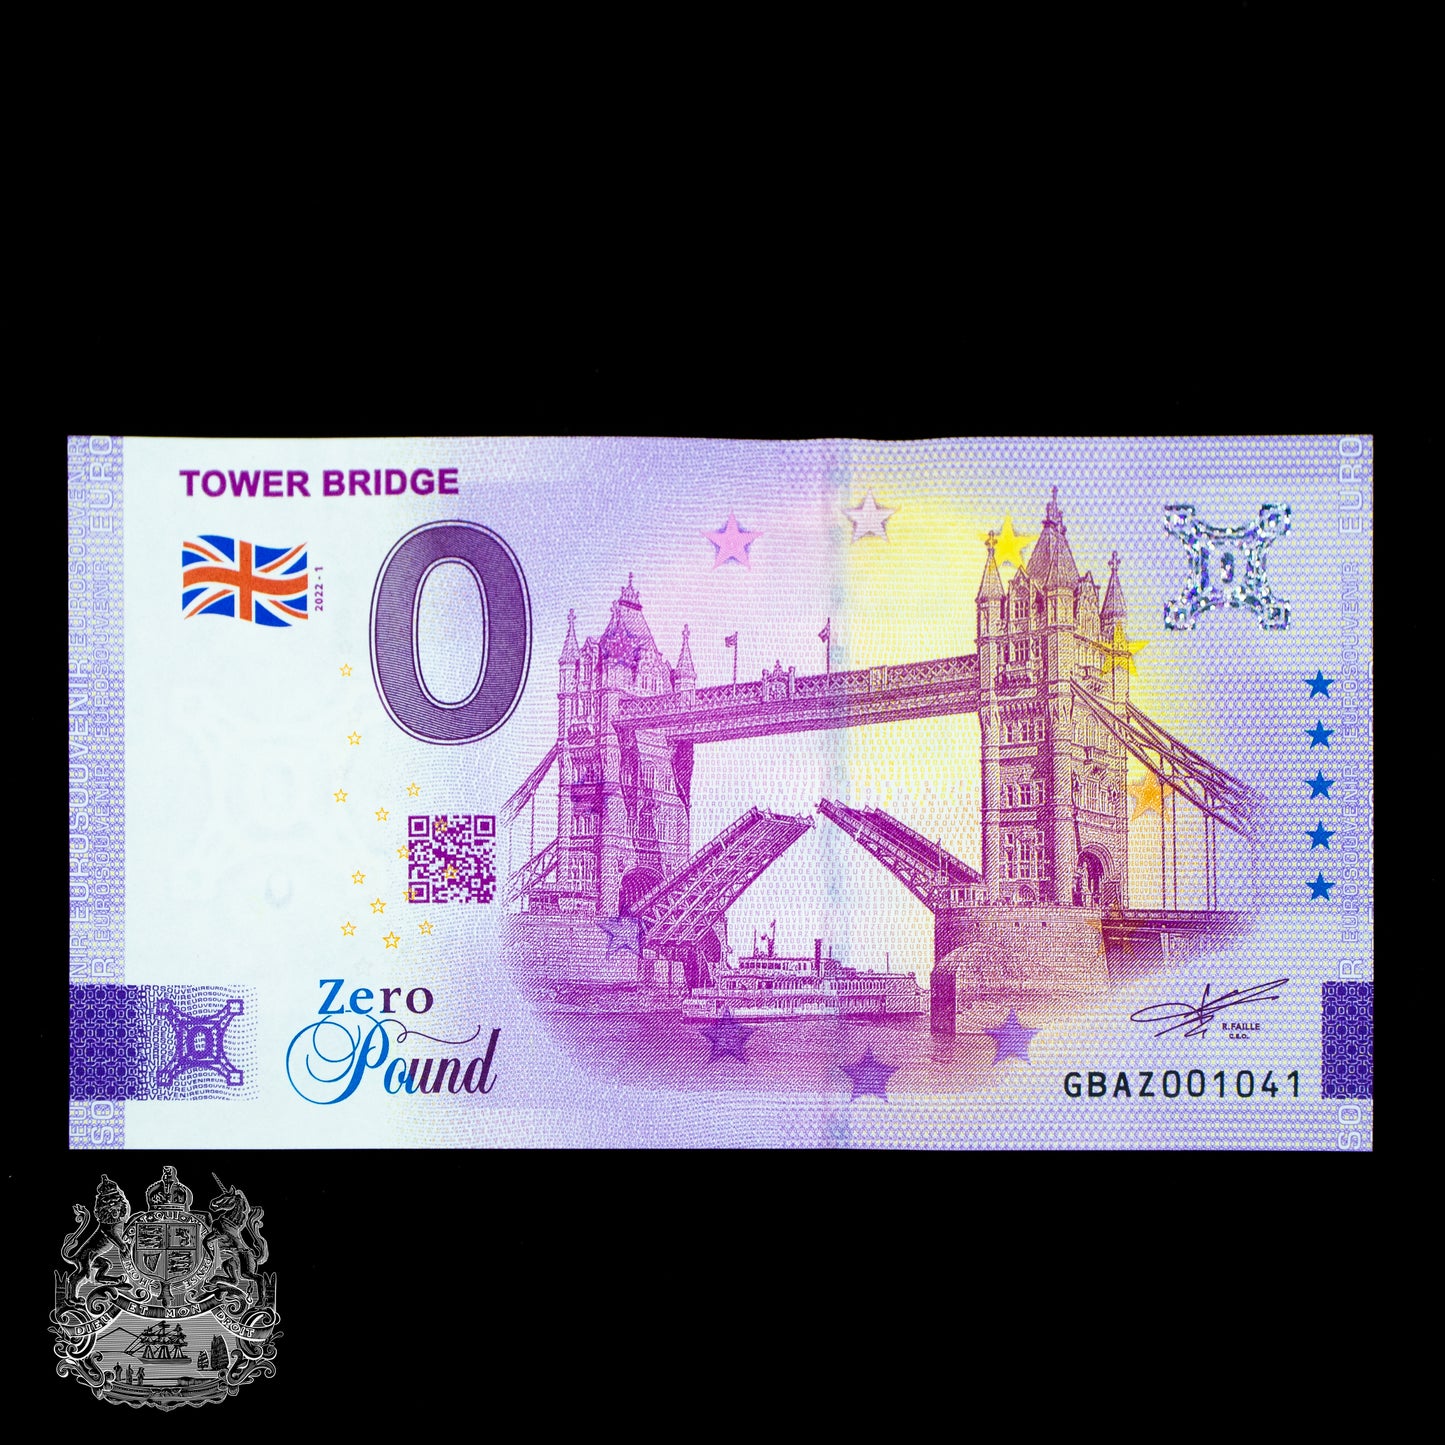 £0 Tower Bridge